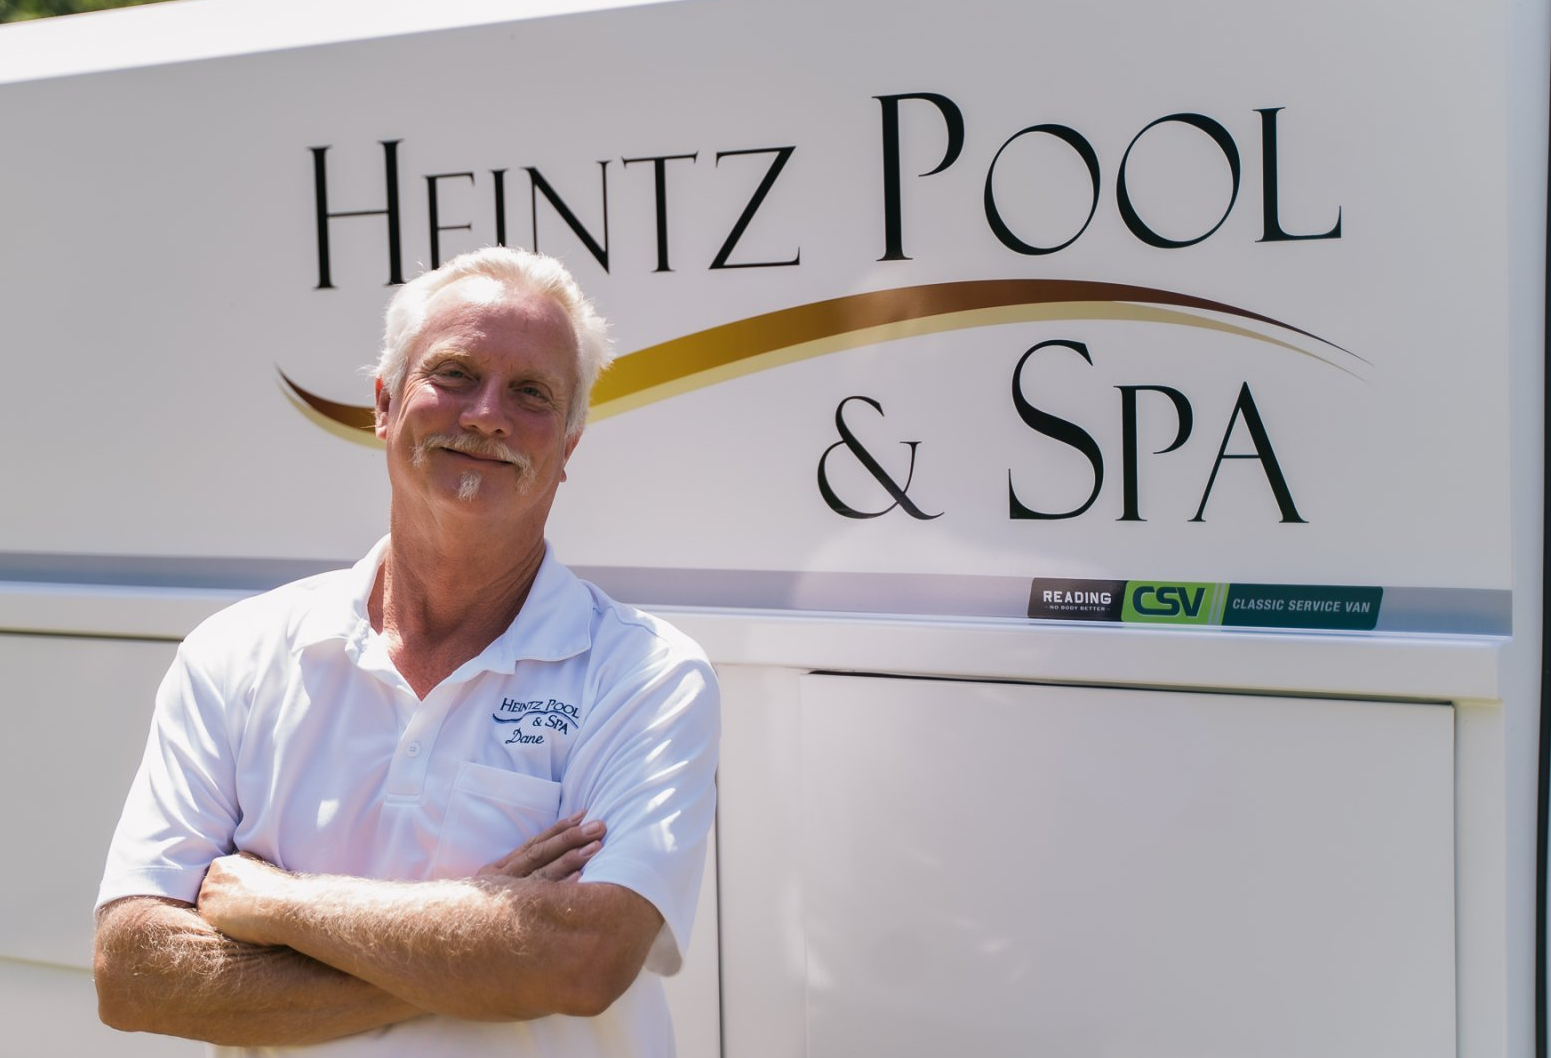 Heintz Pool & Spa team member proudly wearing his white uniform with Heintz Pool & Spa truck as his background